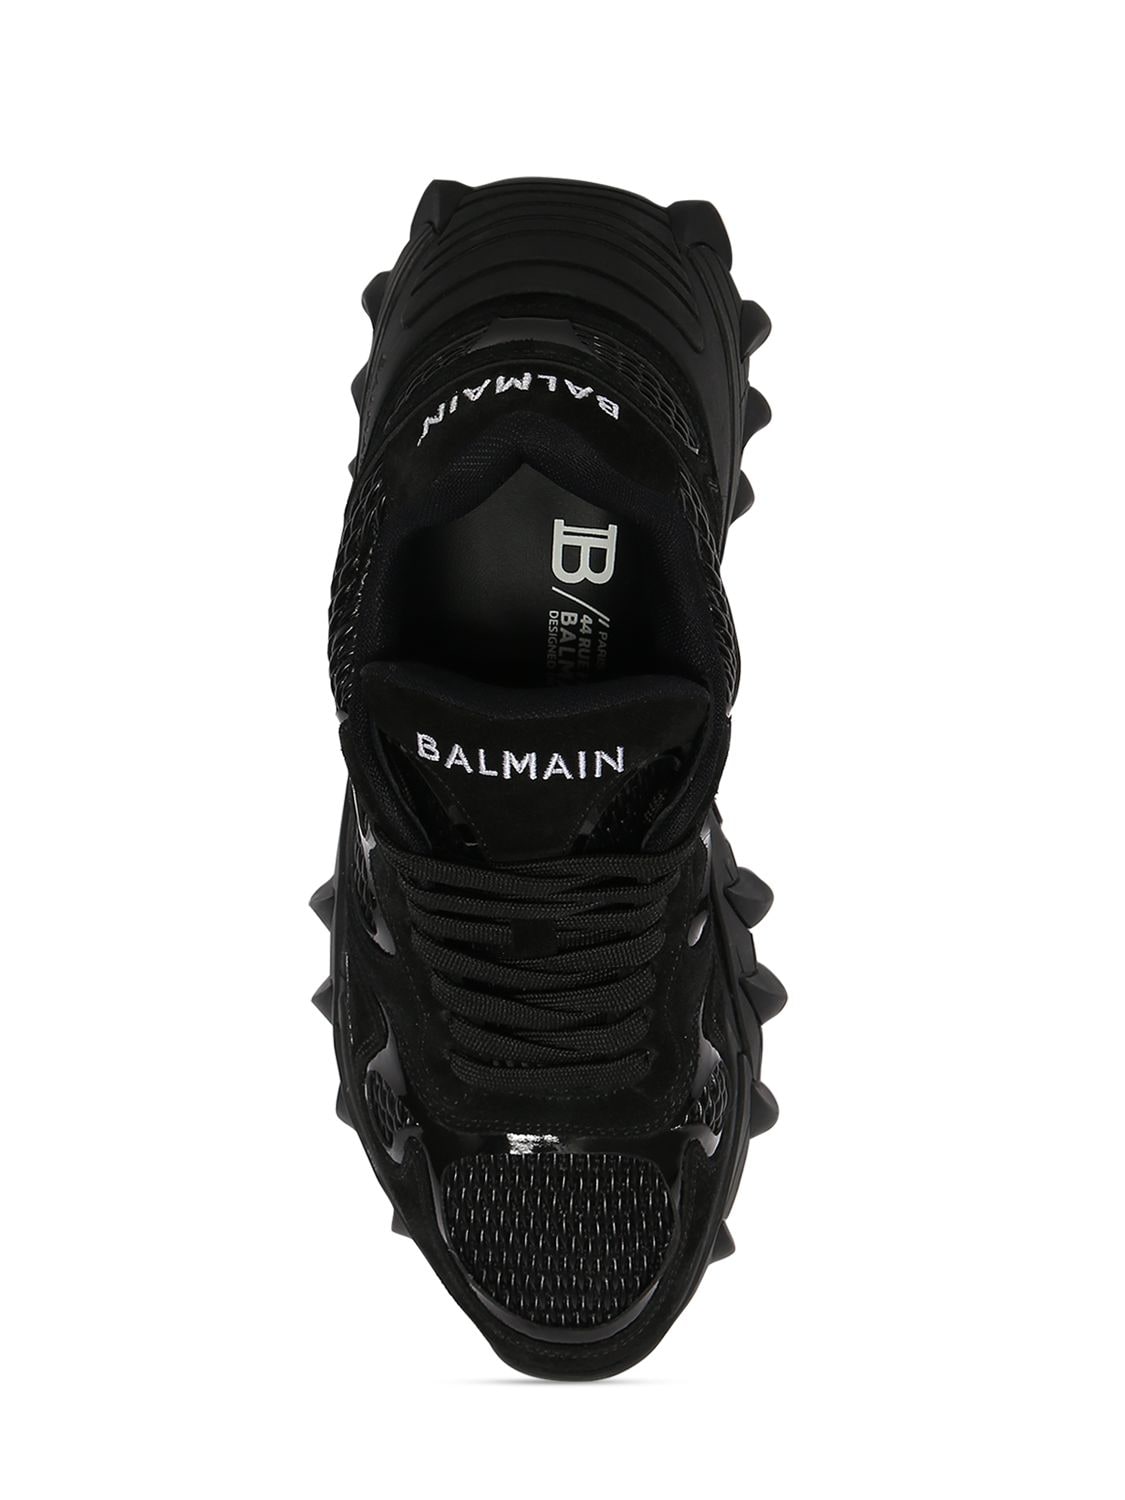 Shop Balmain B East Low Top Sneakers In Black